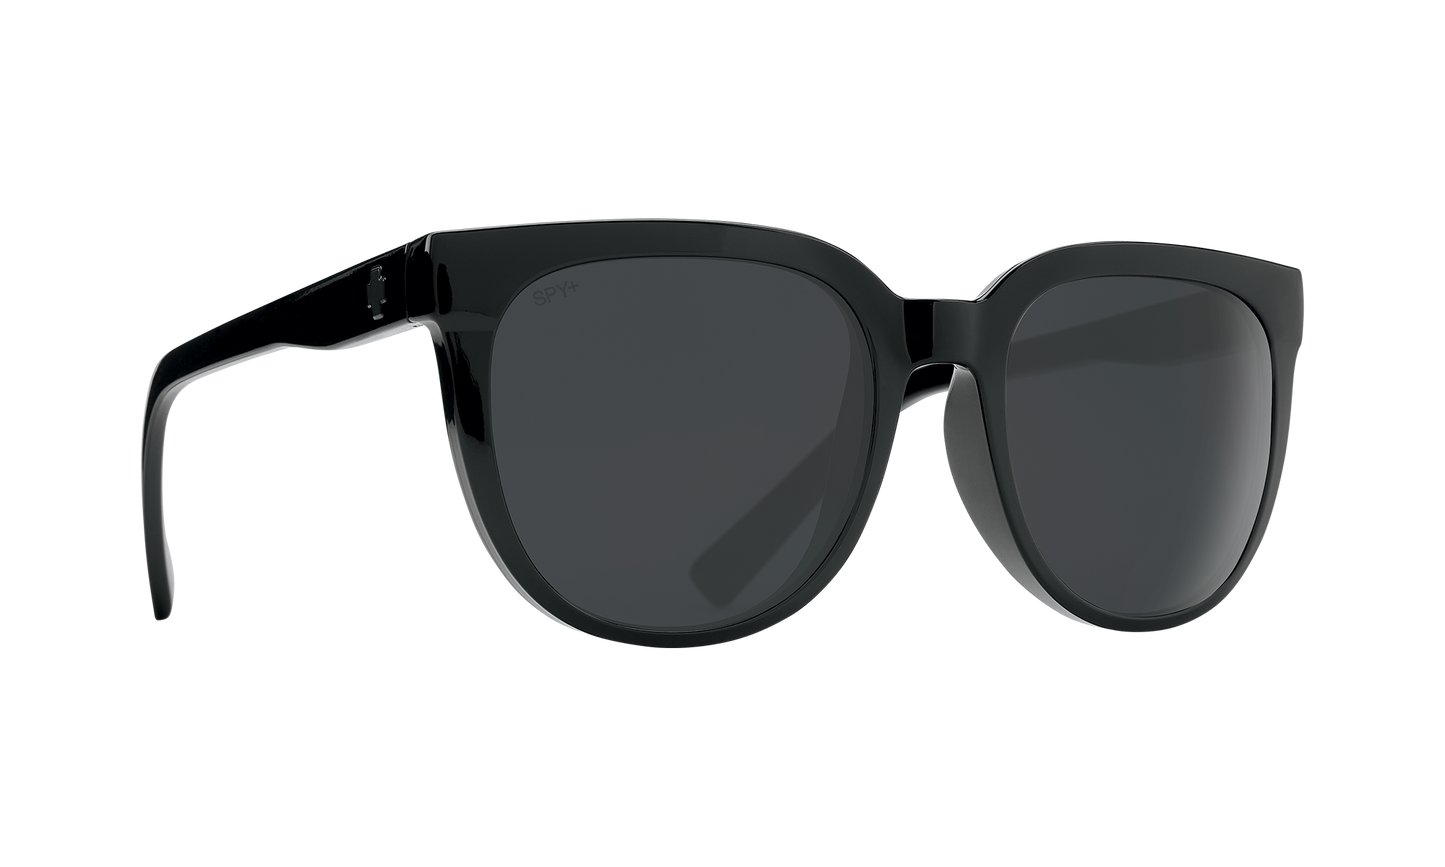 SPY Bewilder Sunglasses  Gray Black  54-20-148